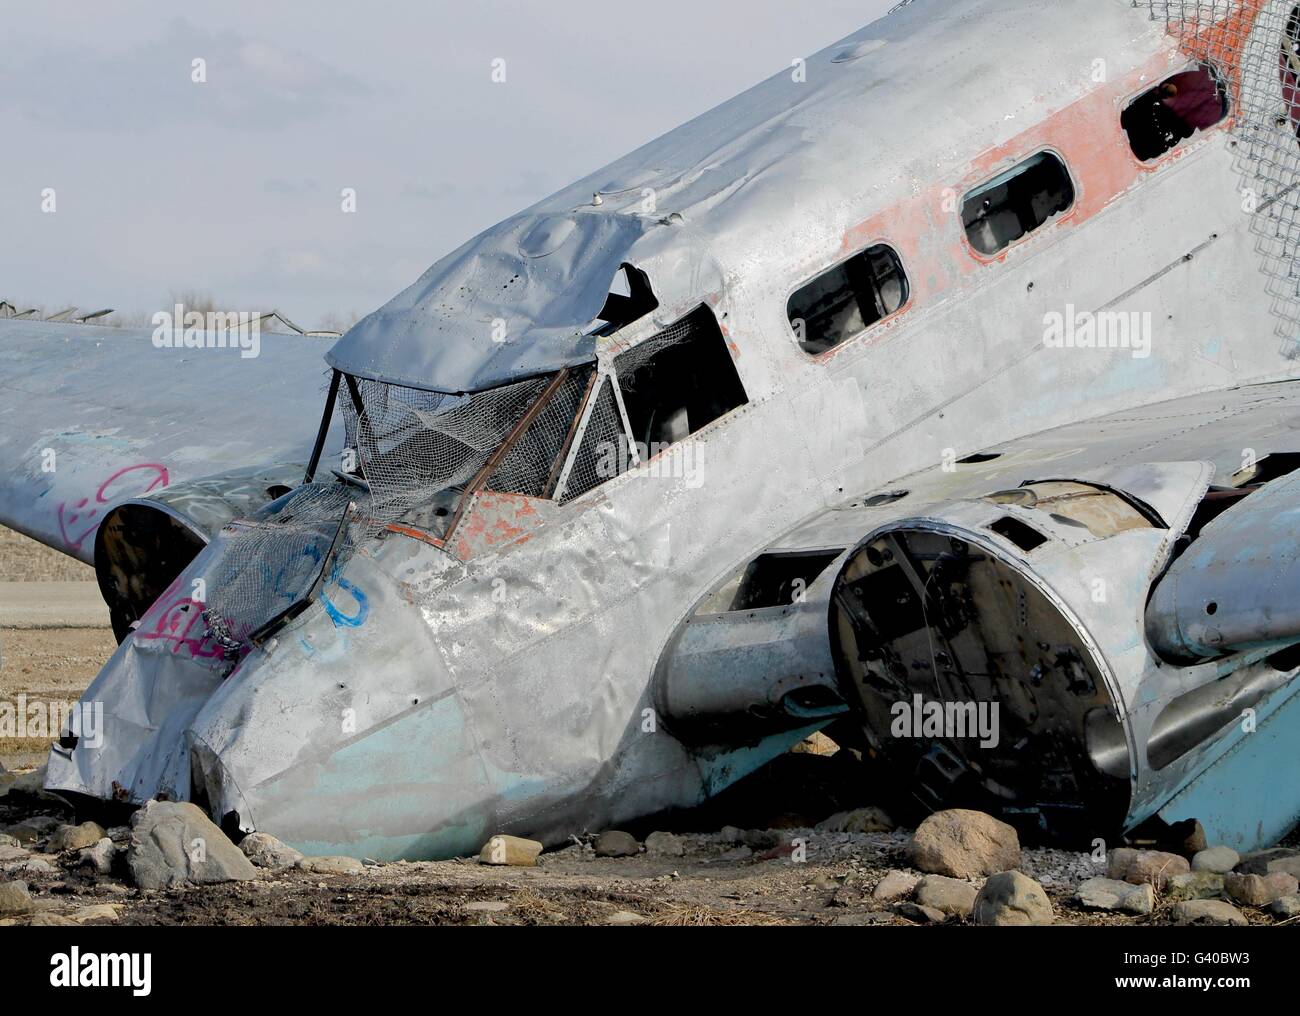 crashed plane on display Stock Photo